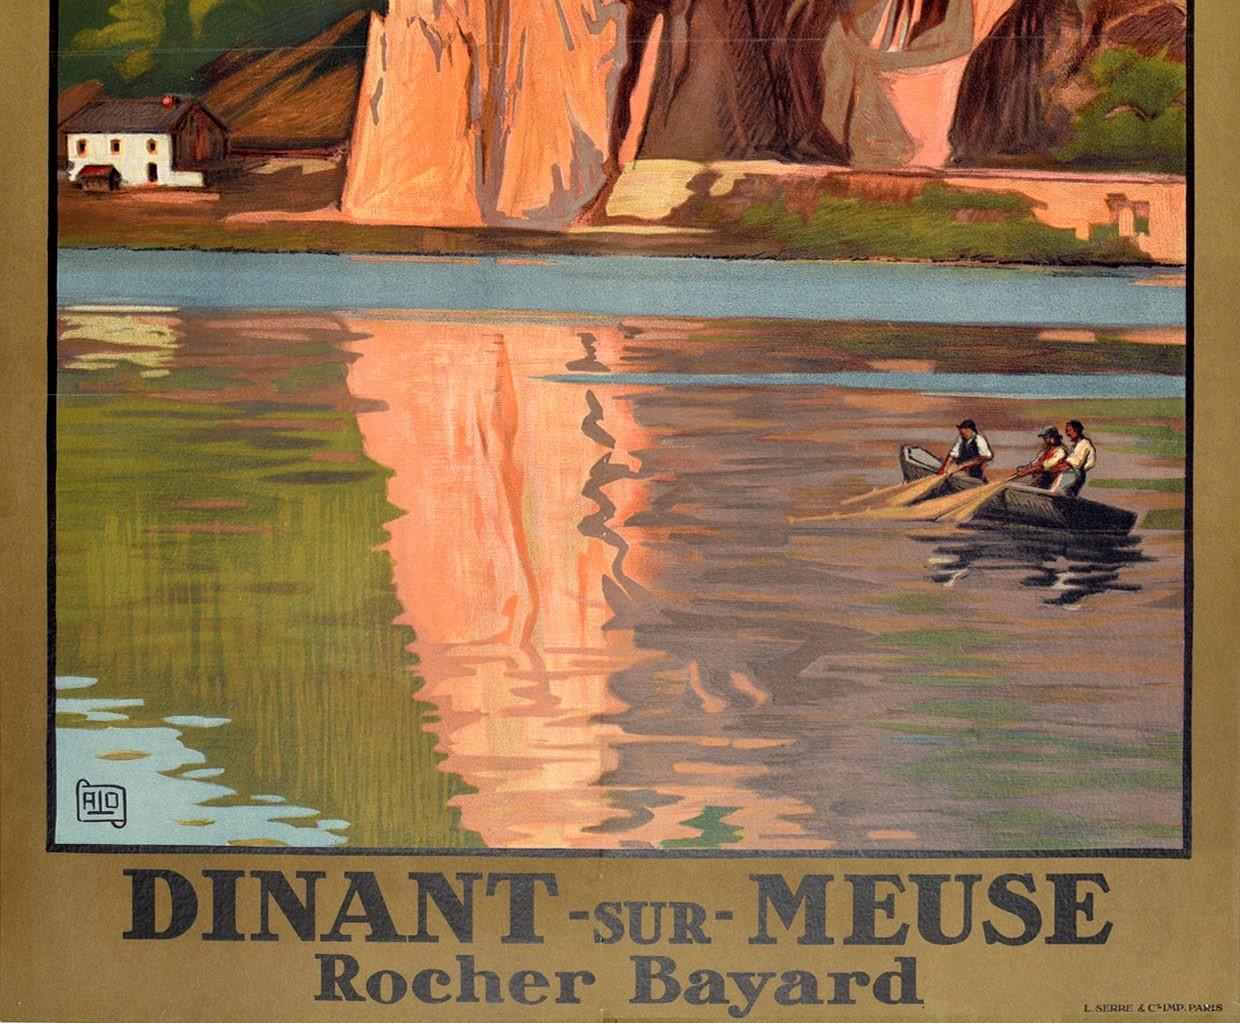 Belgian Original Vintage Railway Travel Poster Dinant Sur Meuse Rocher Bayard Rock Belge For Sale